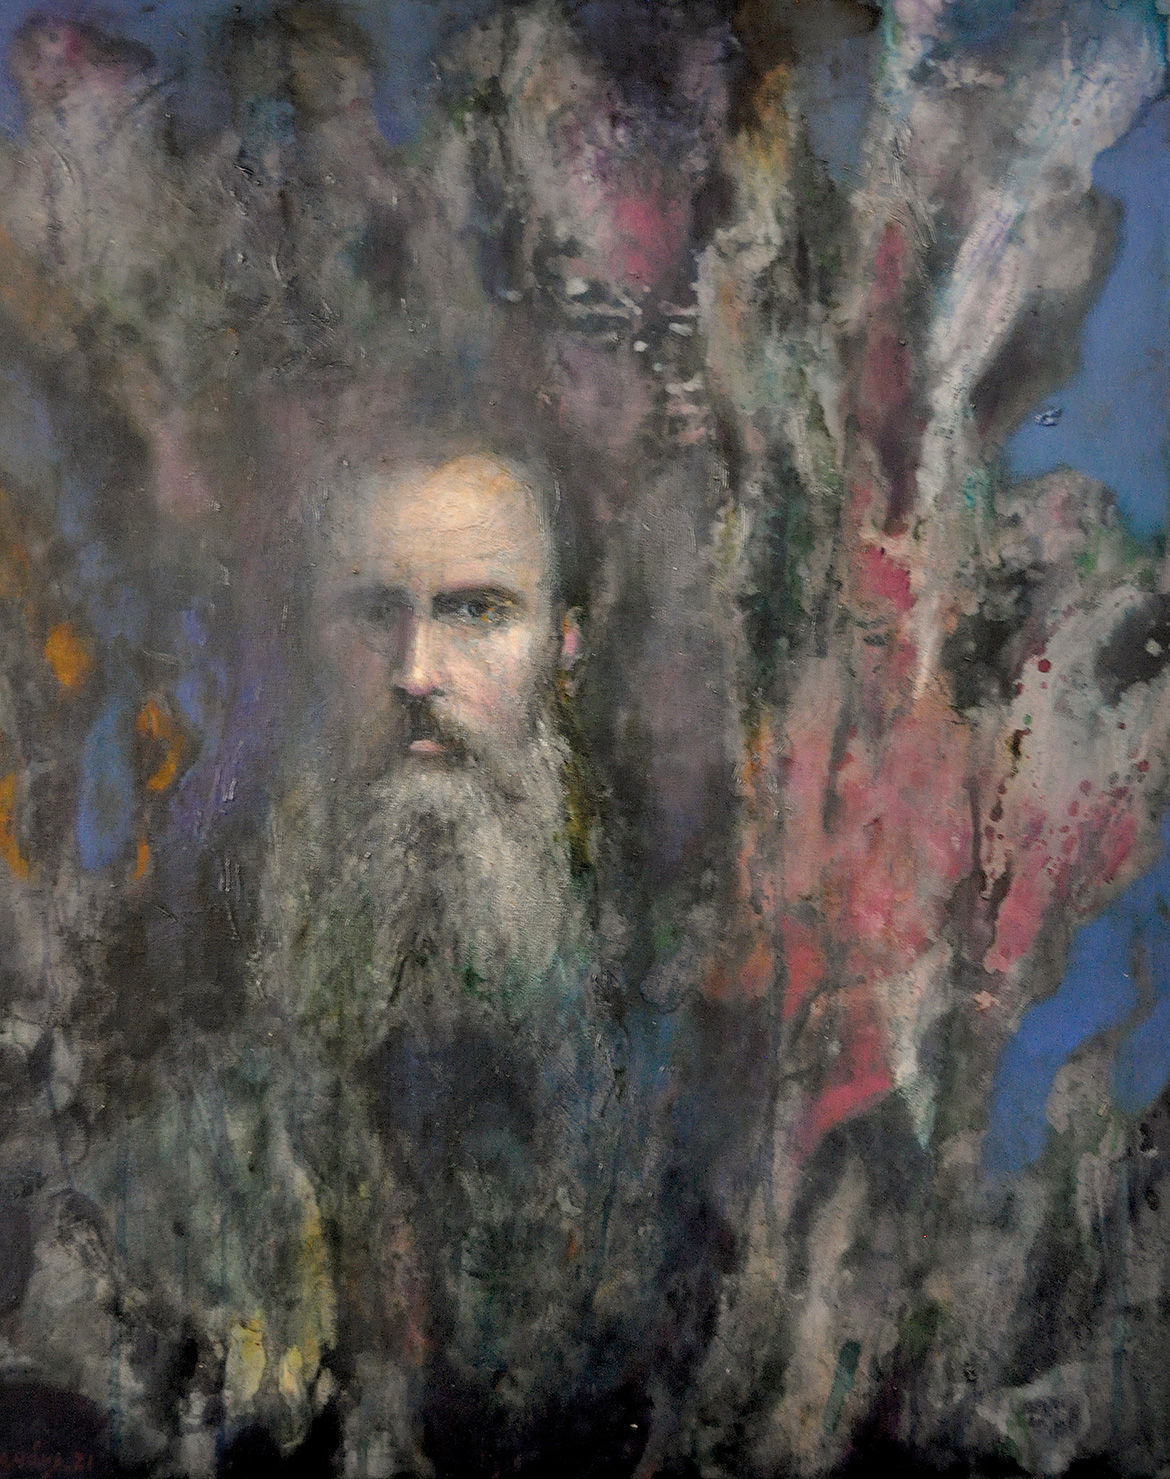 Dostoevsky in His Wet Loneliness